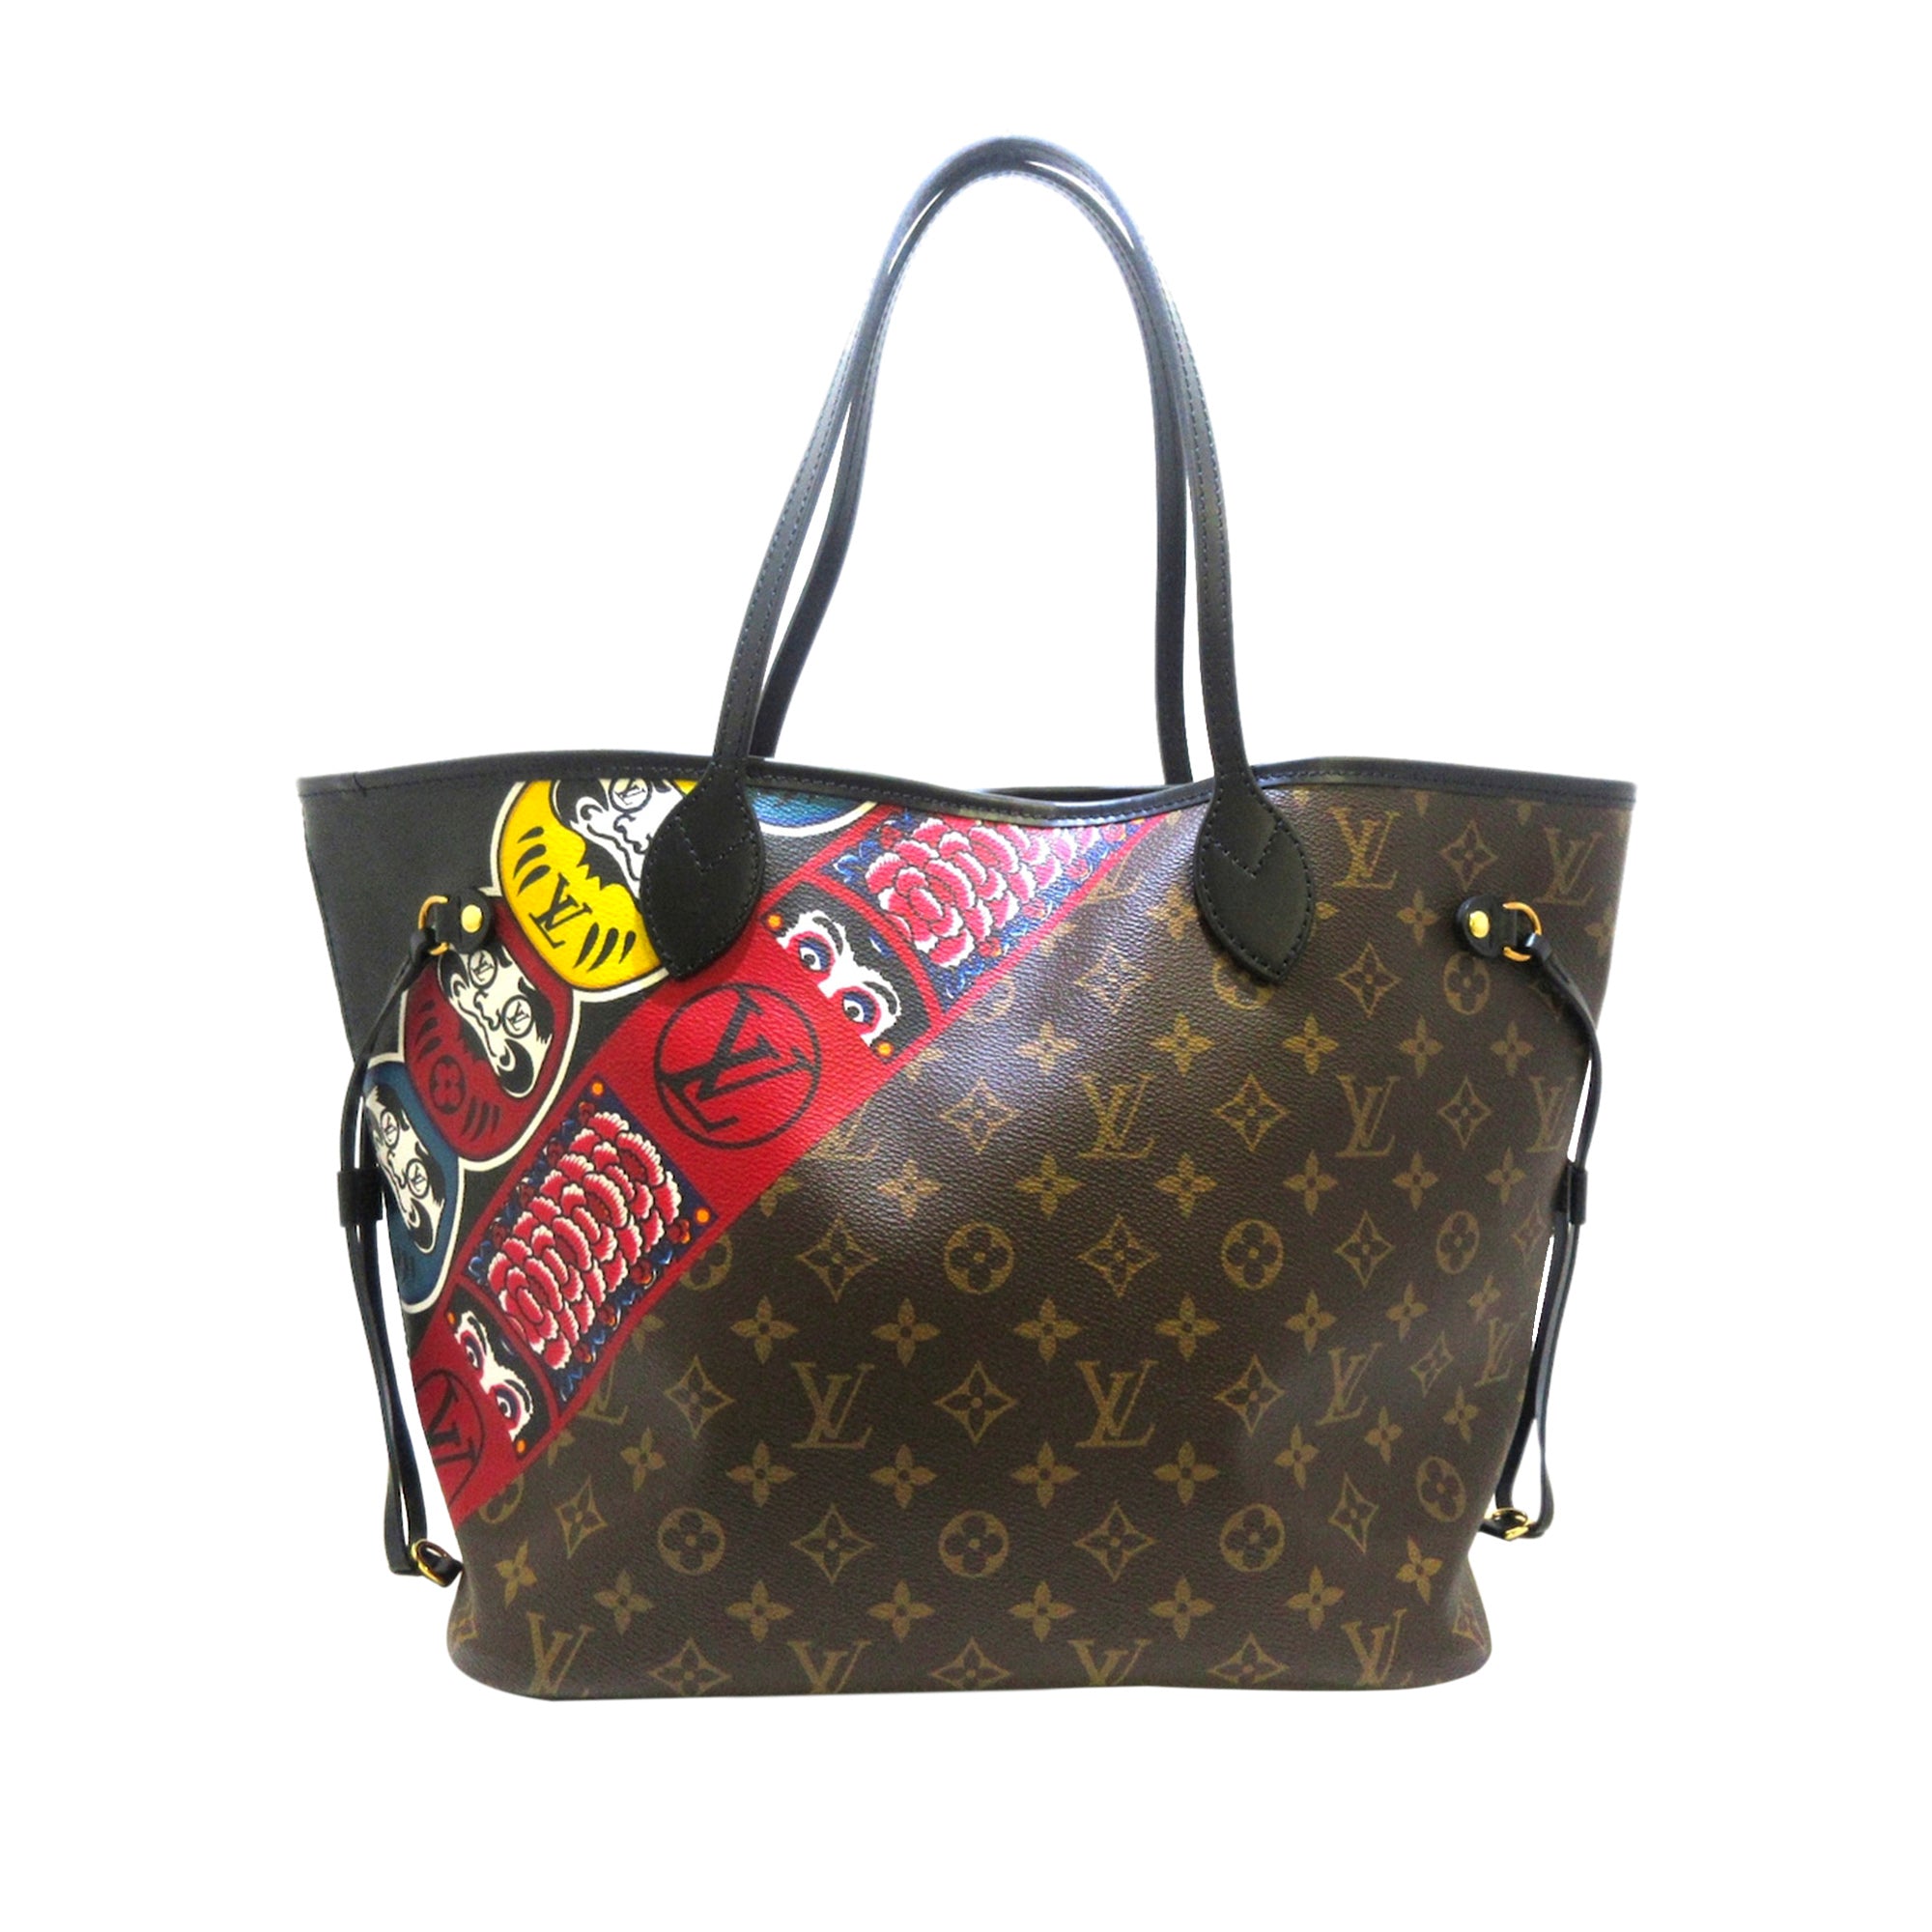 Louis Vuitton Neverfull MM - Good or Bag